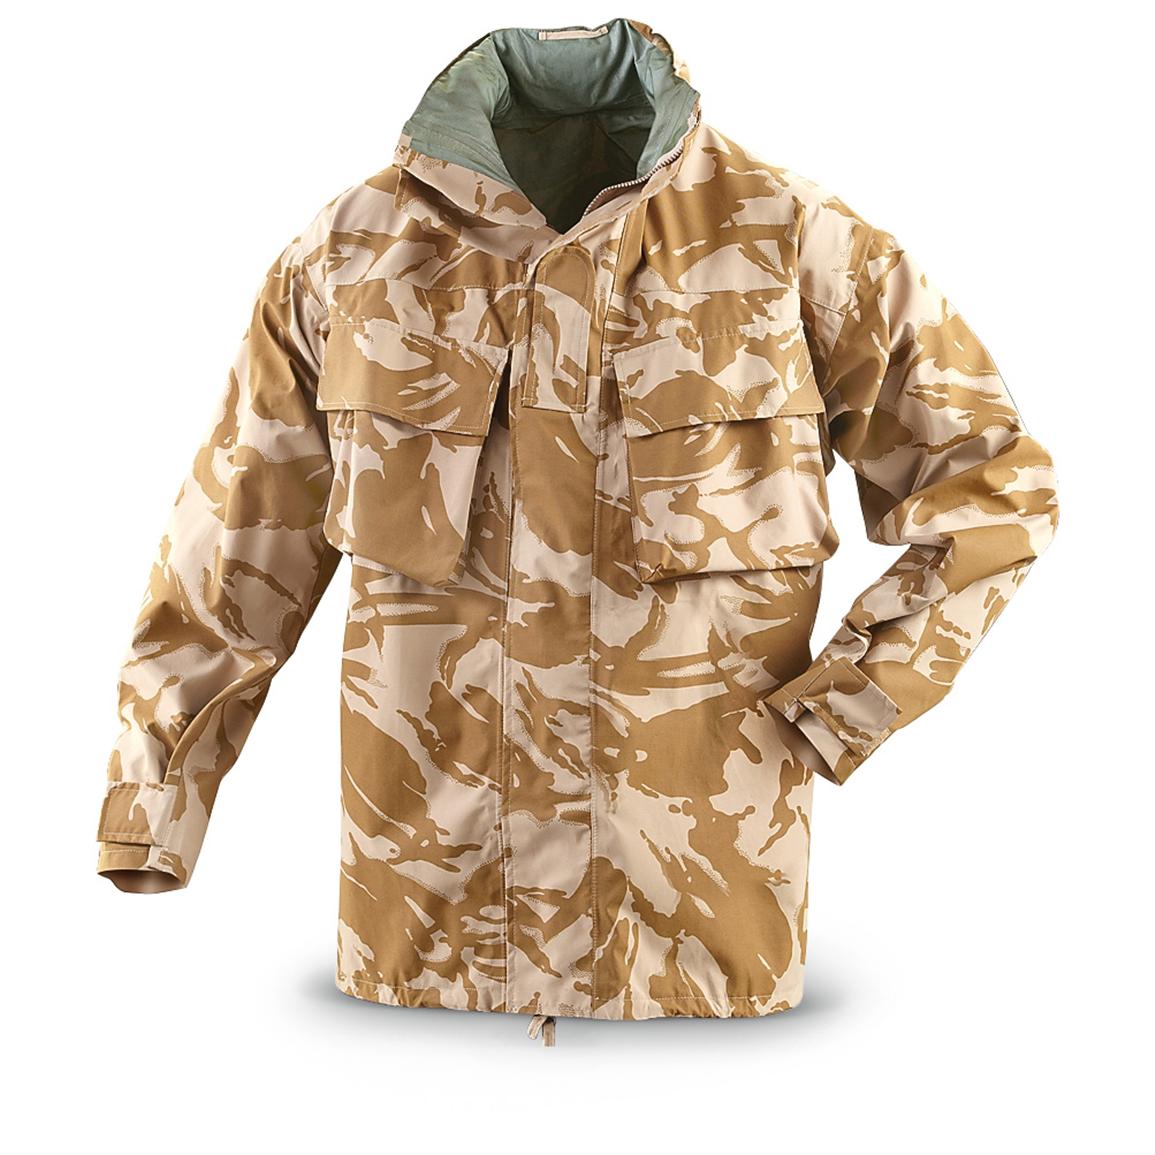 New British Military GORE-TEX® Jacket, Desert DPM - 236237, Rain Gear